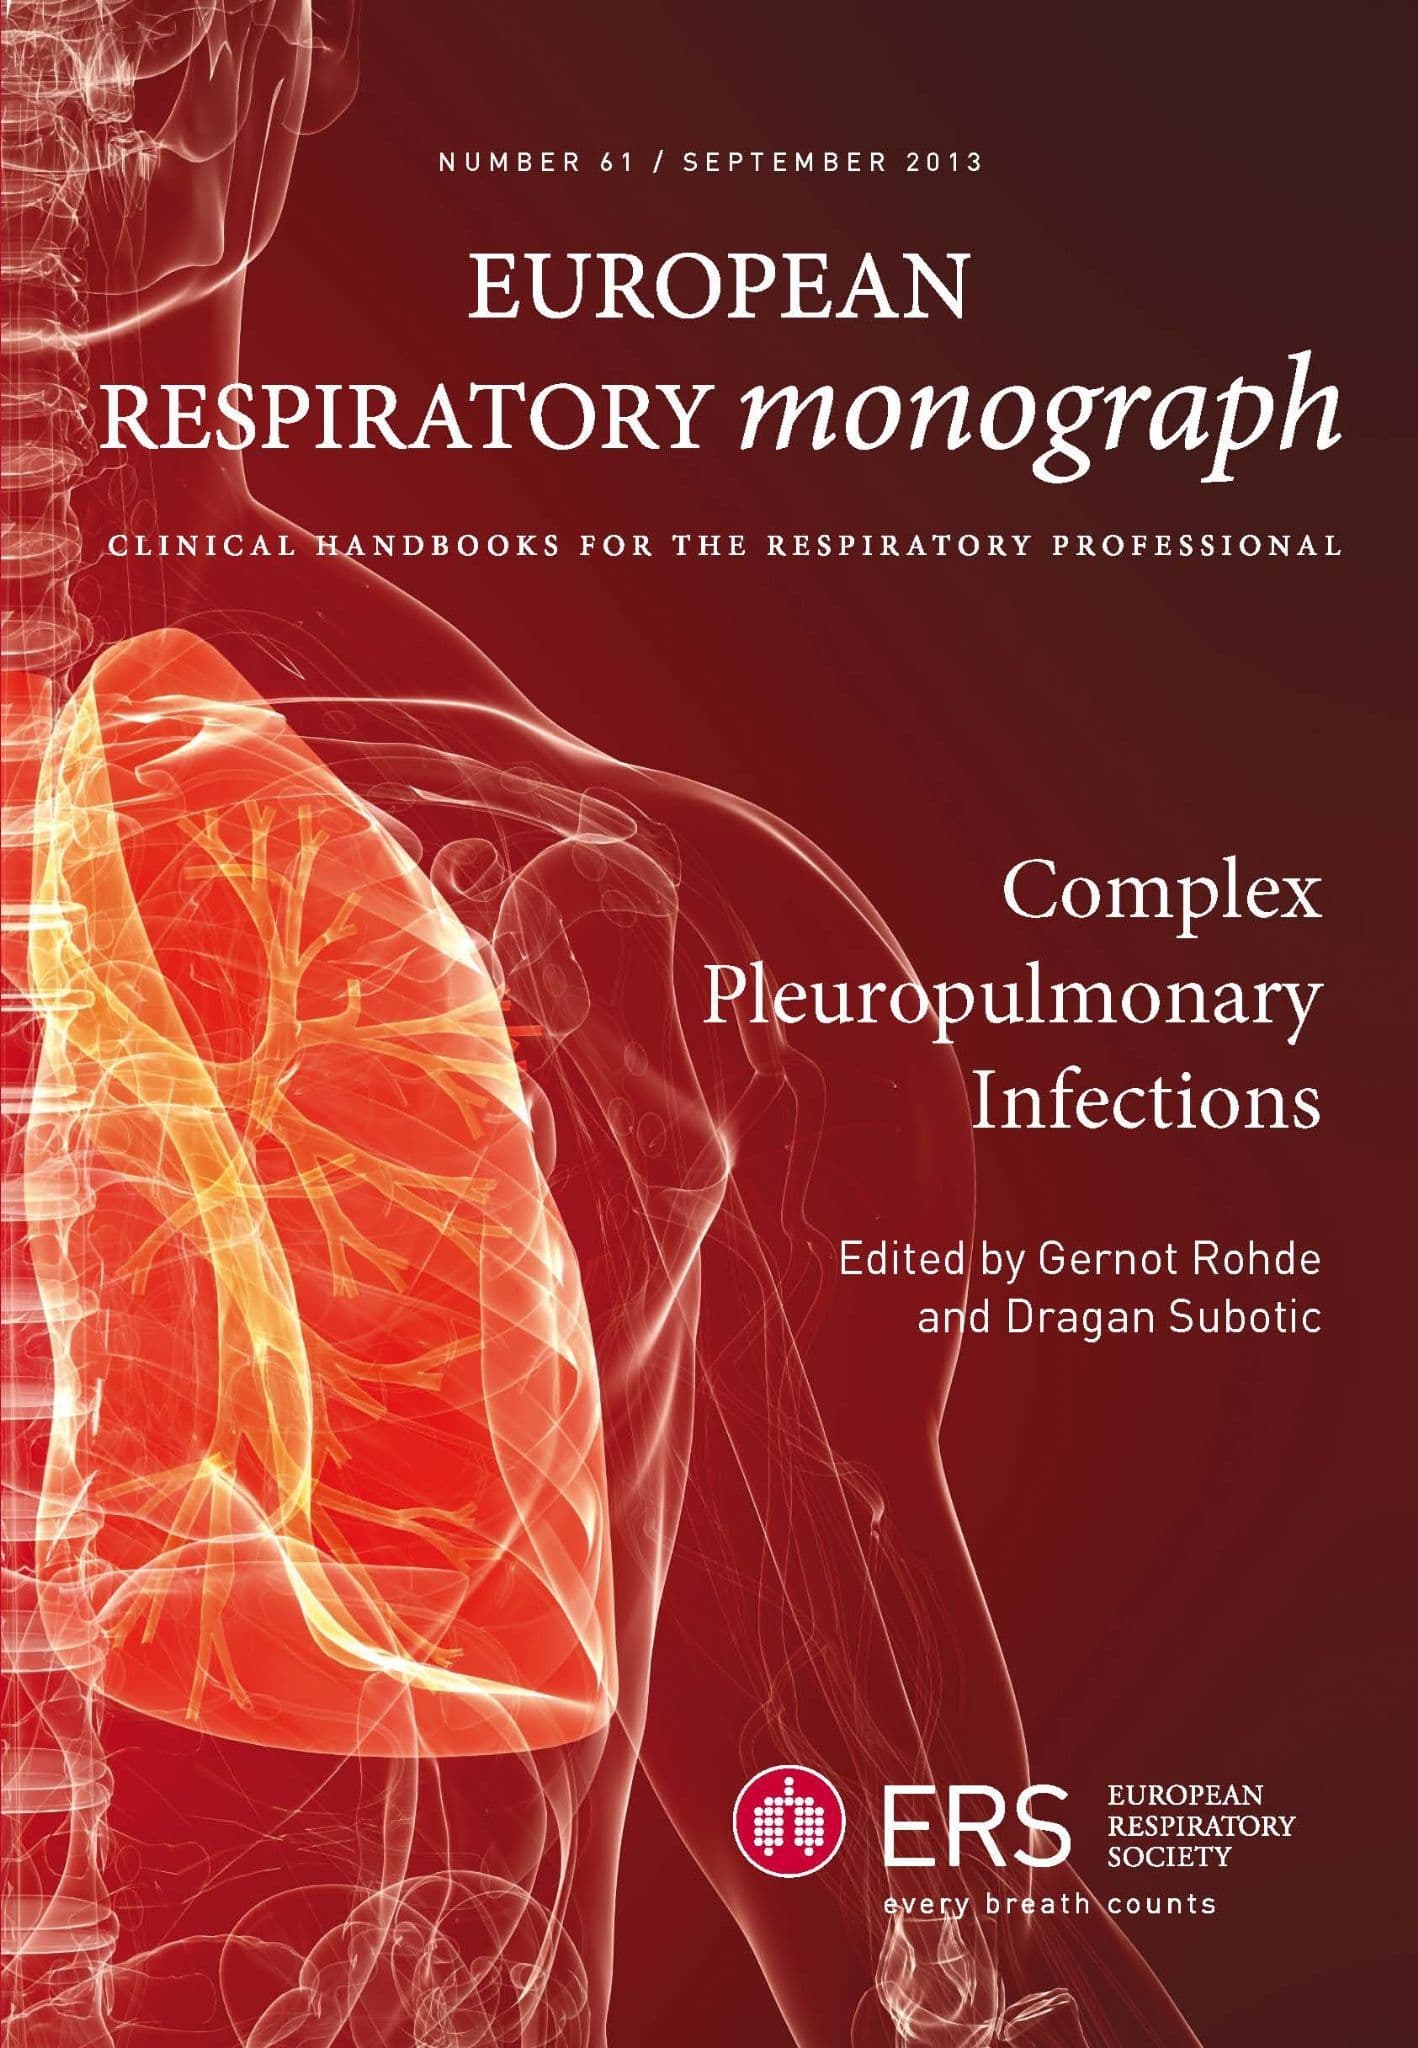 Complex Pleuropulmonary Infections